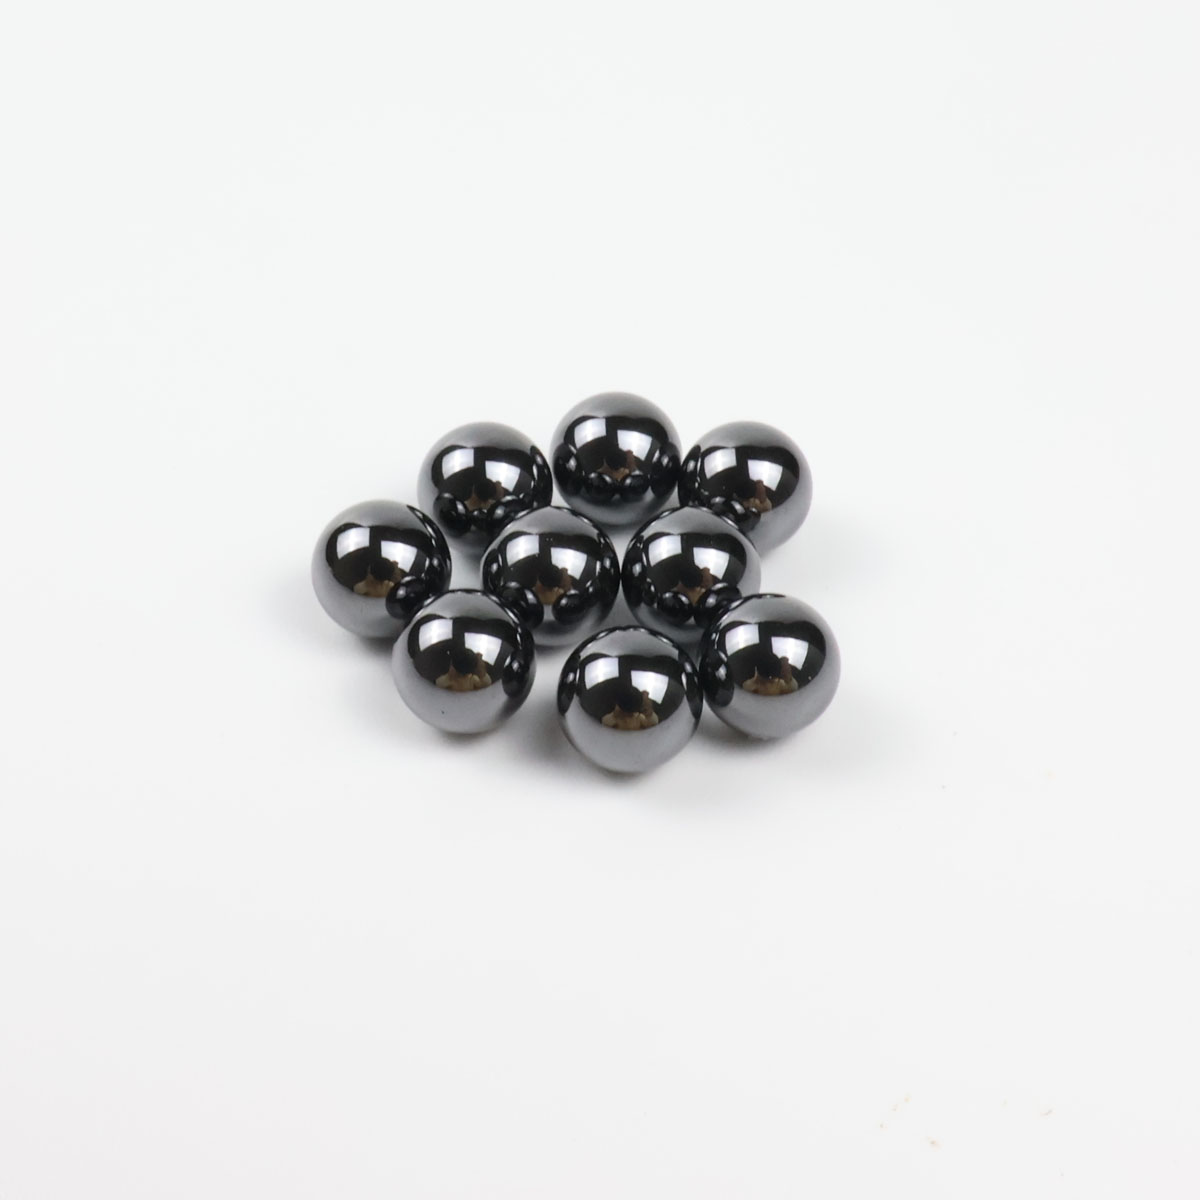 4.5mm sic terp pearls